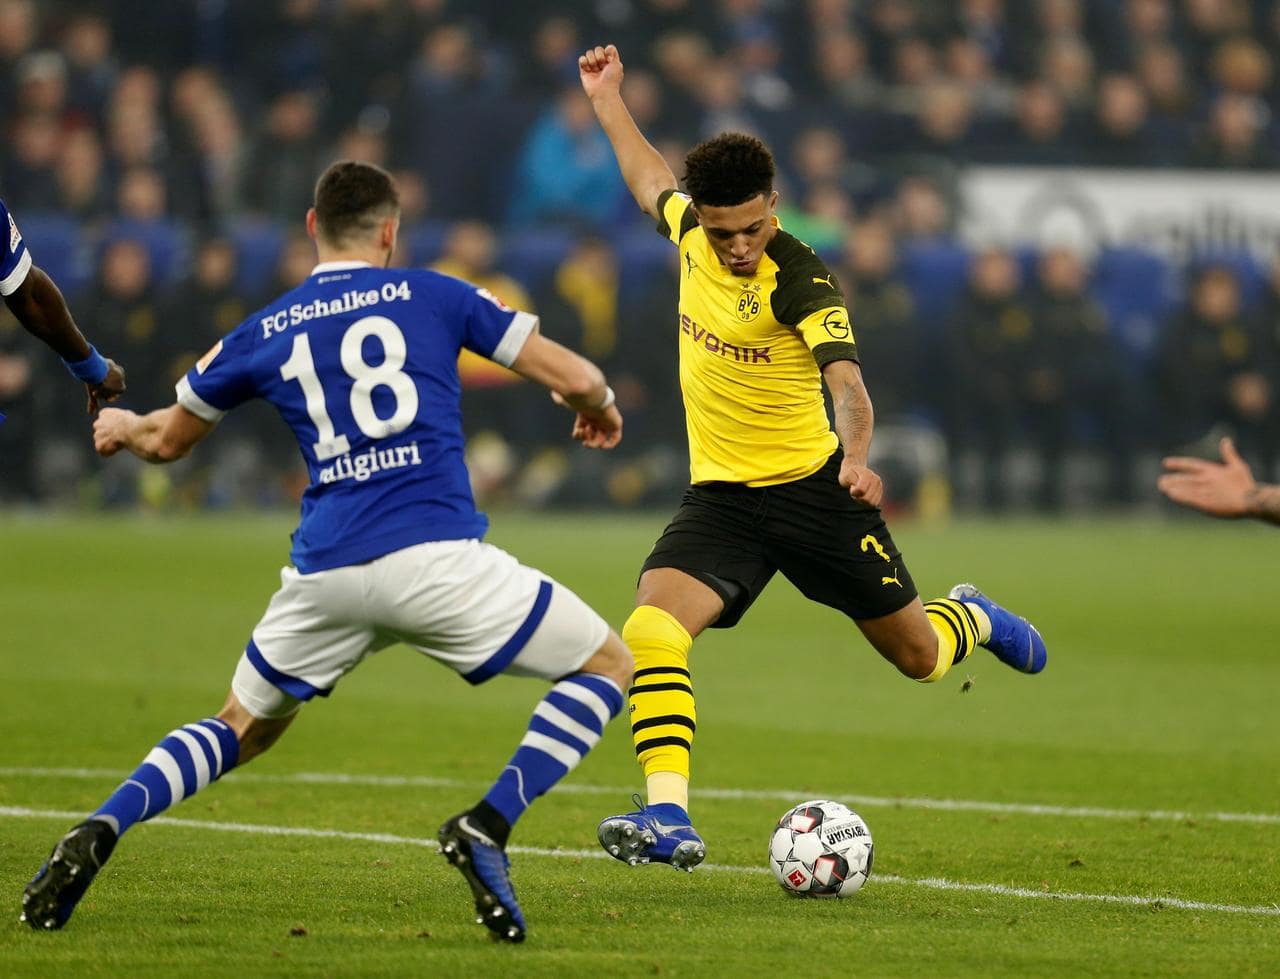 Borussia Dortmund vs Schalke 04 Free Betting Tips